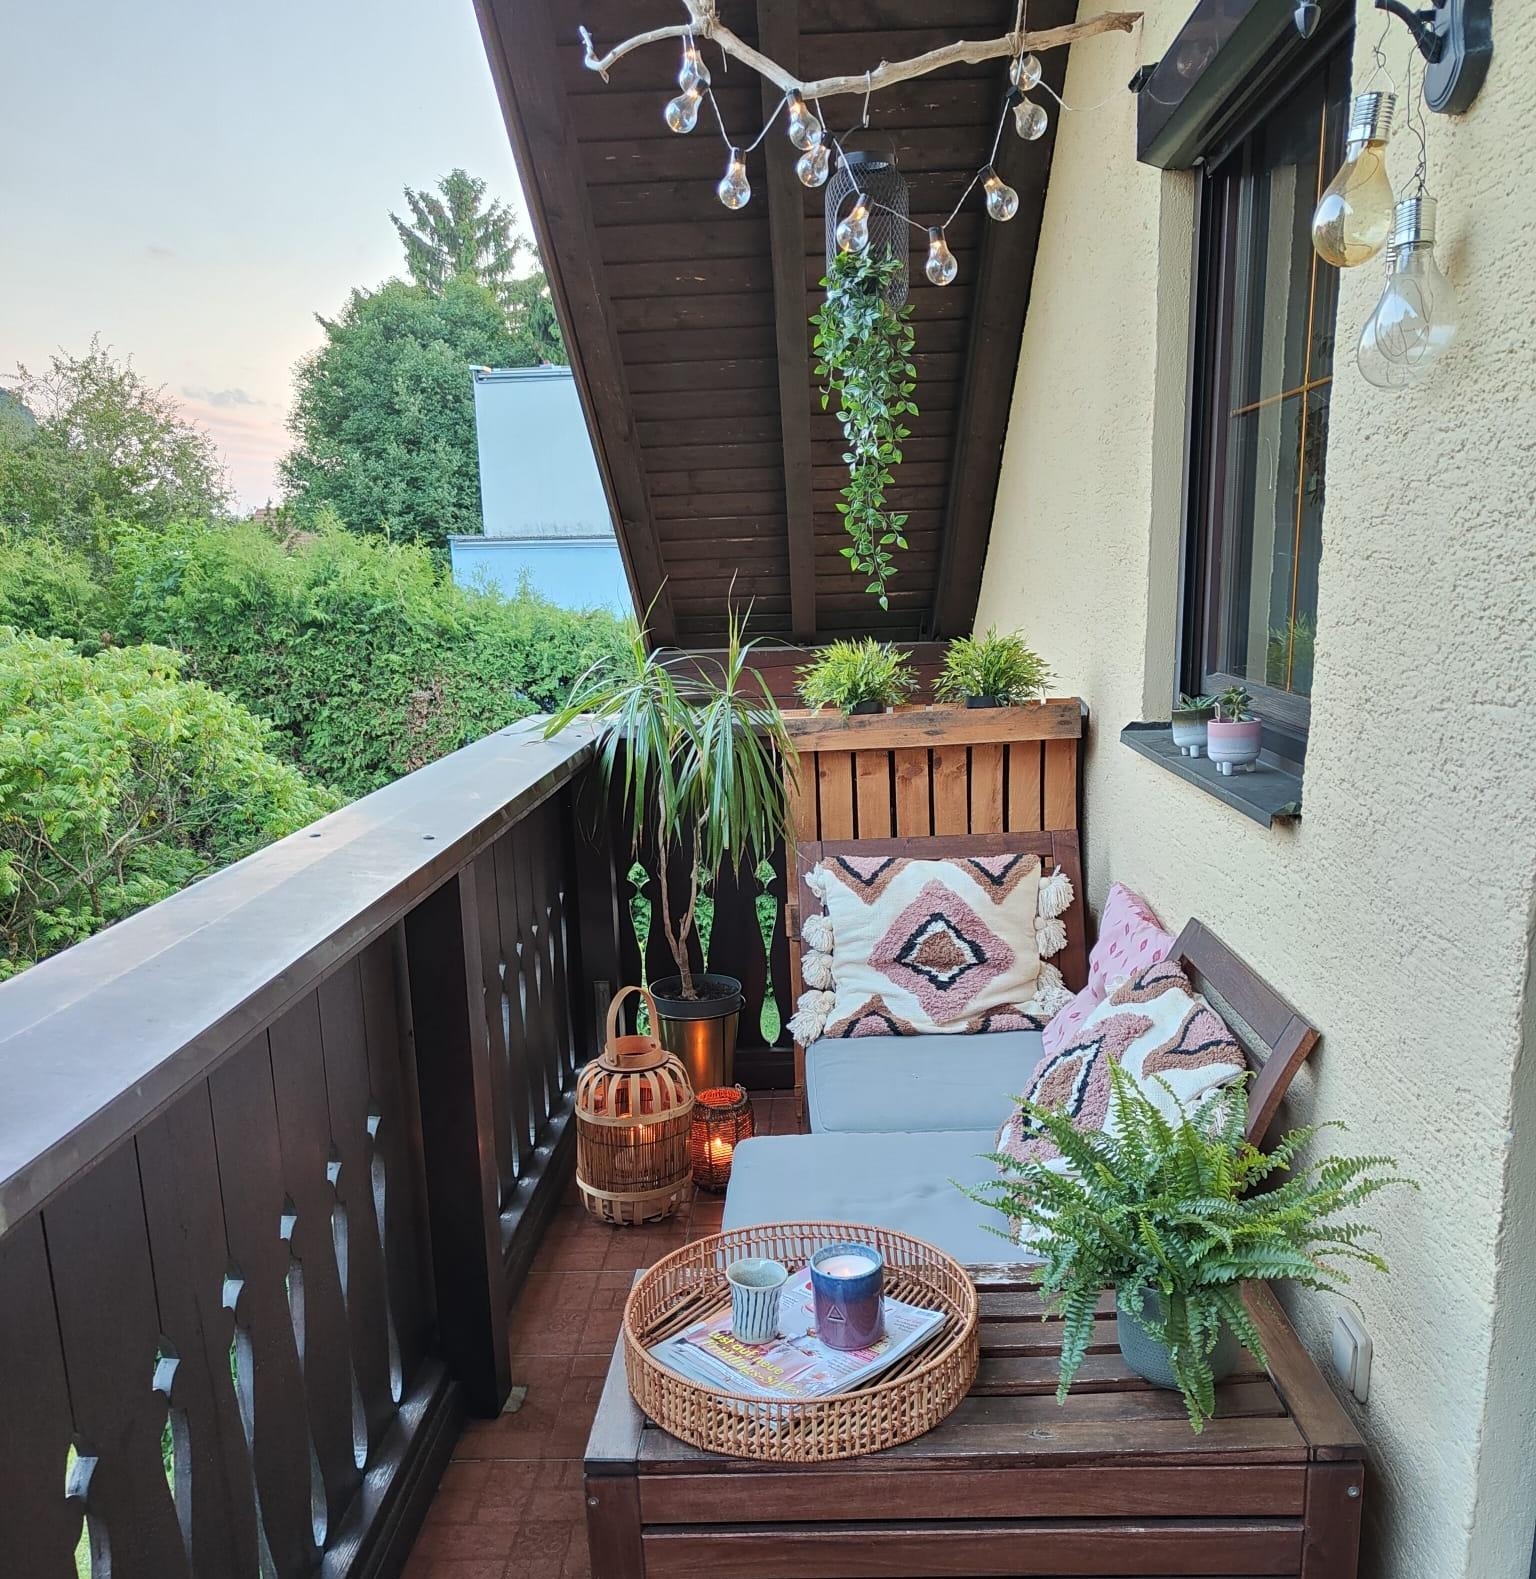 Summertime 🍹☀️🌴 #balkon #outdoor